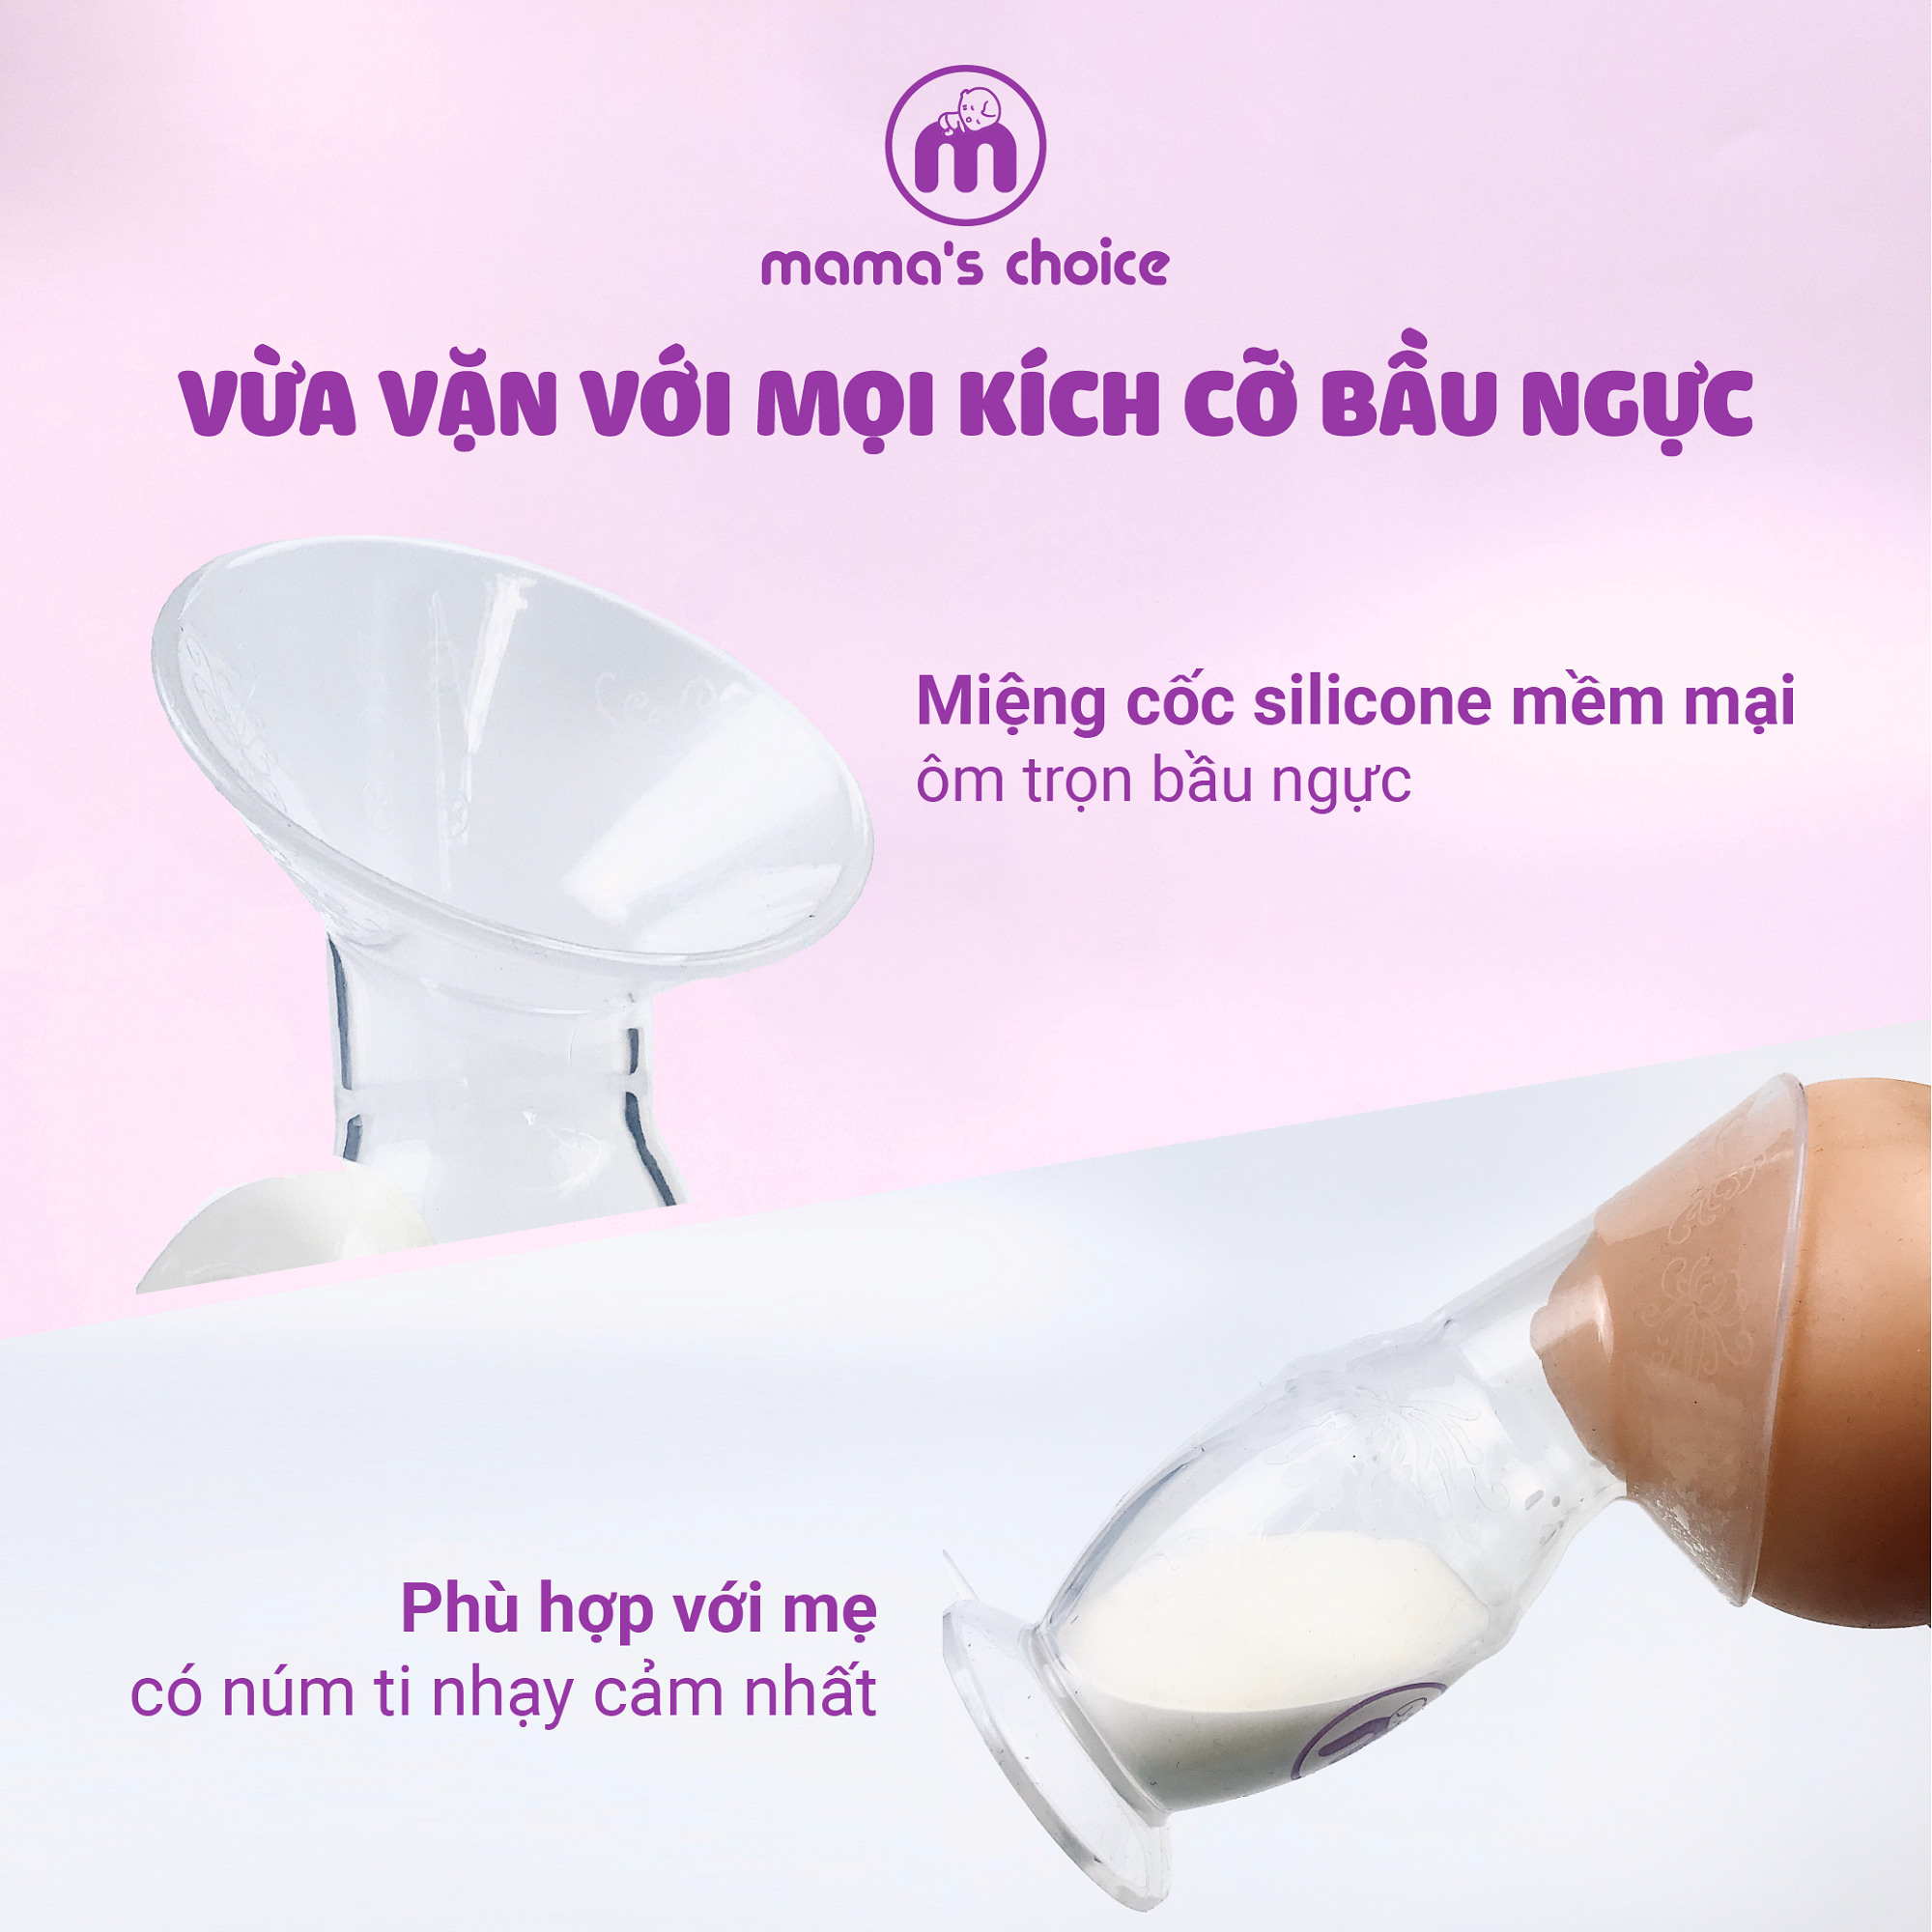 Cốc Hứng Sữa Mama’s Choice, Hút Sữa Rảnh Tay, Chất Liệu Silicone Cao Cấp, Chứng Nhận An Toàn FDA - 1 Cốc